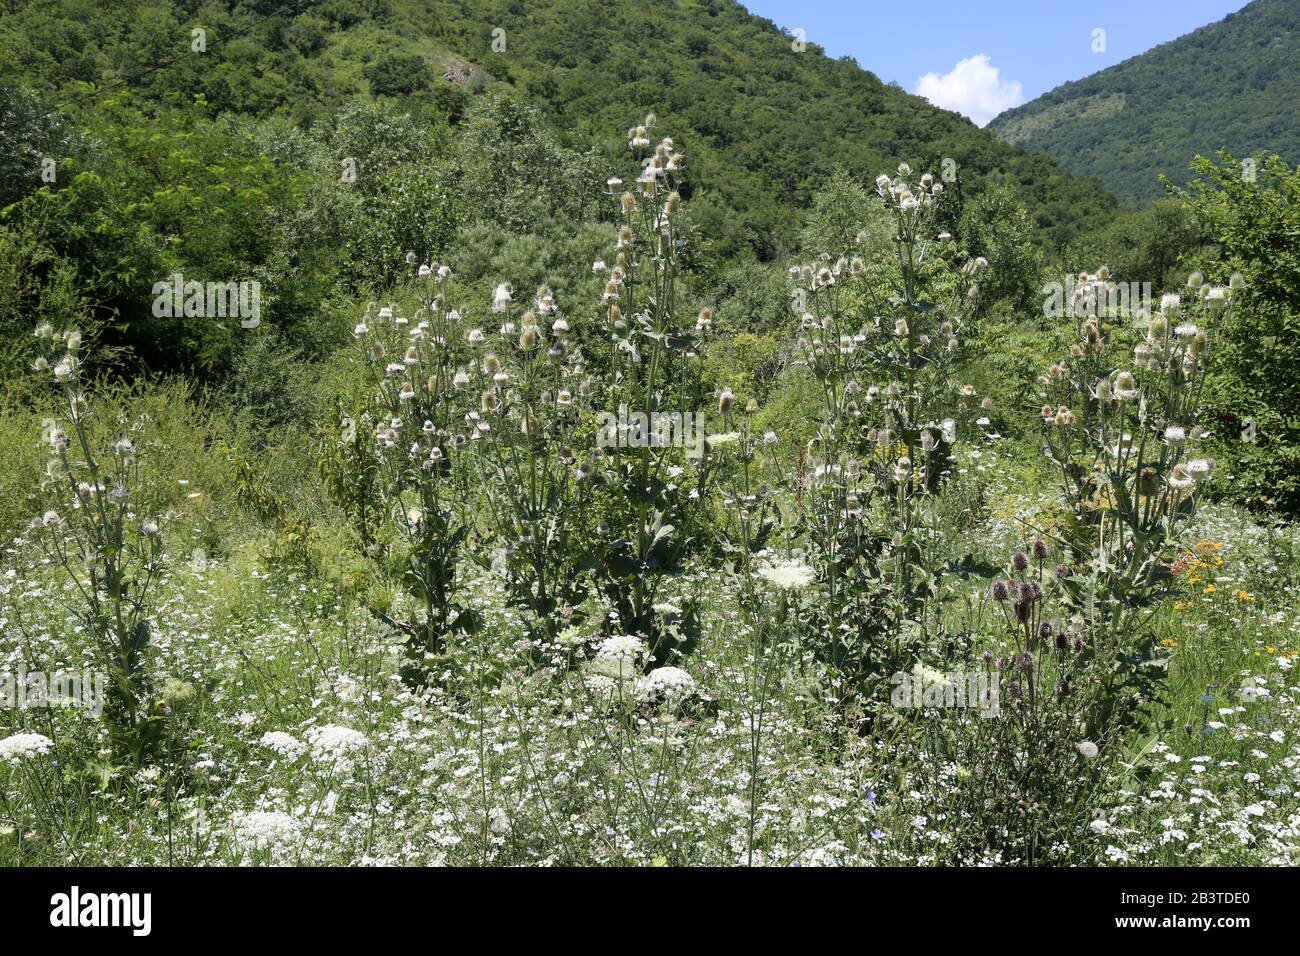 Dipsacus laciniatus - Wild plant shot in summer. Stock Photo